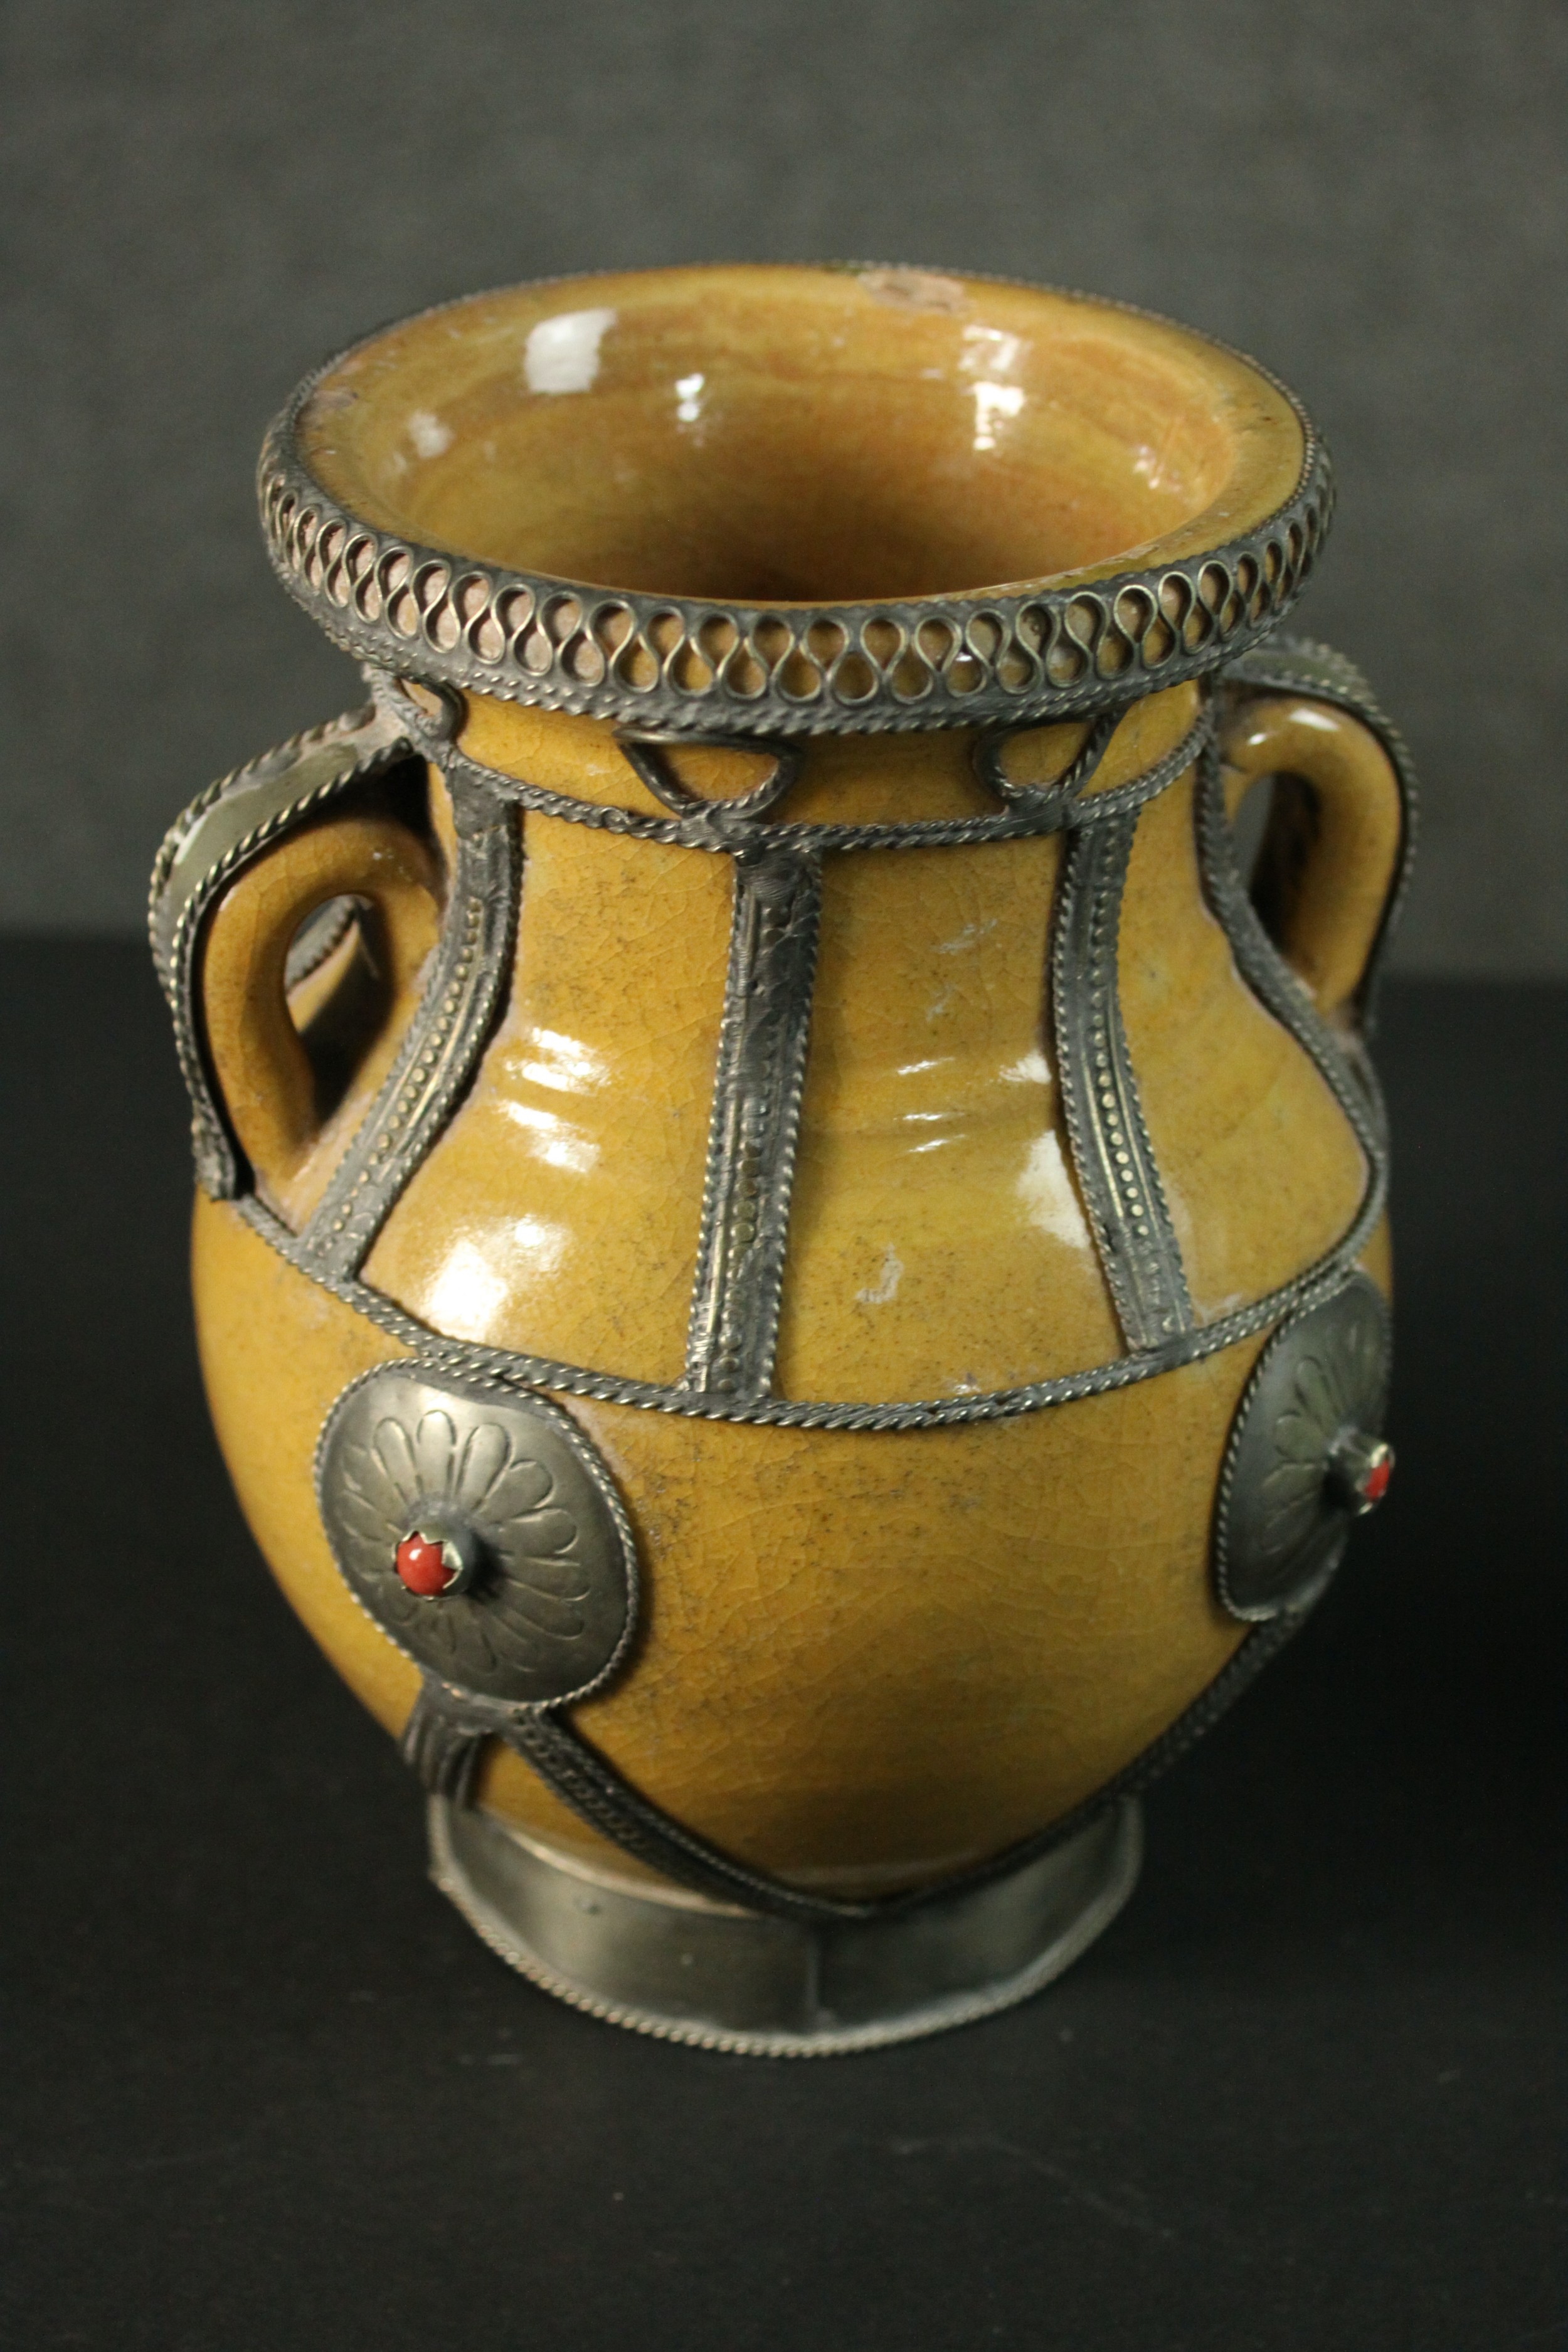 A Korean 99% silver and cloisonné enamel vine design vase along with a Moroccan ceramic vase. - Image 3 of 7